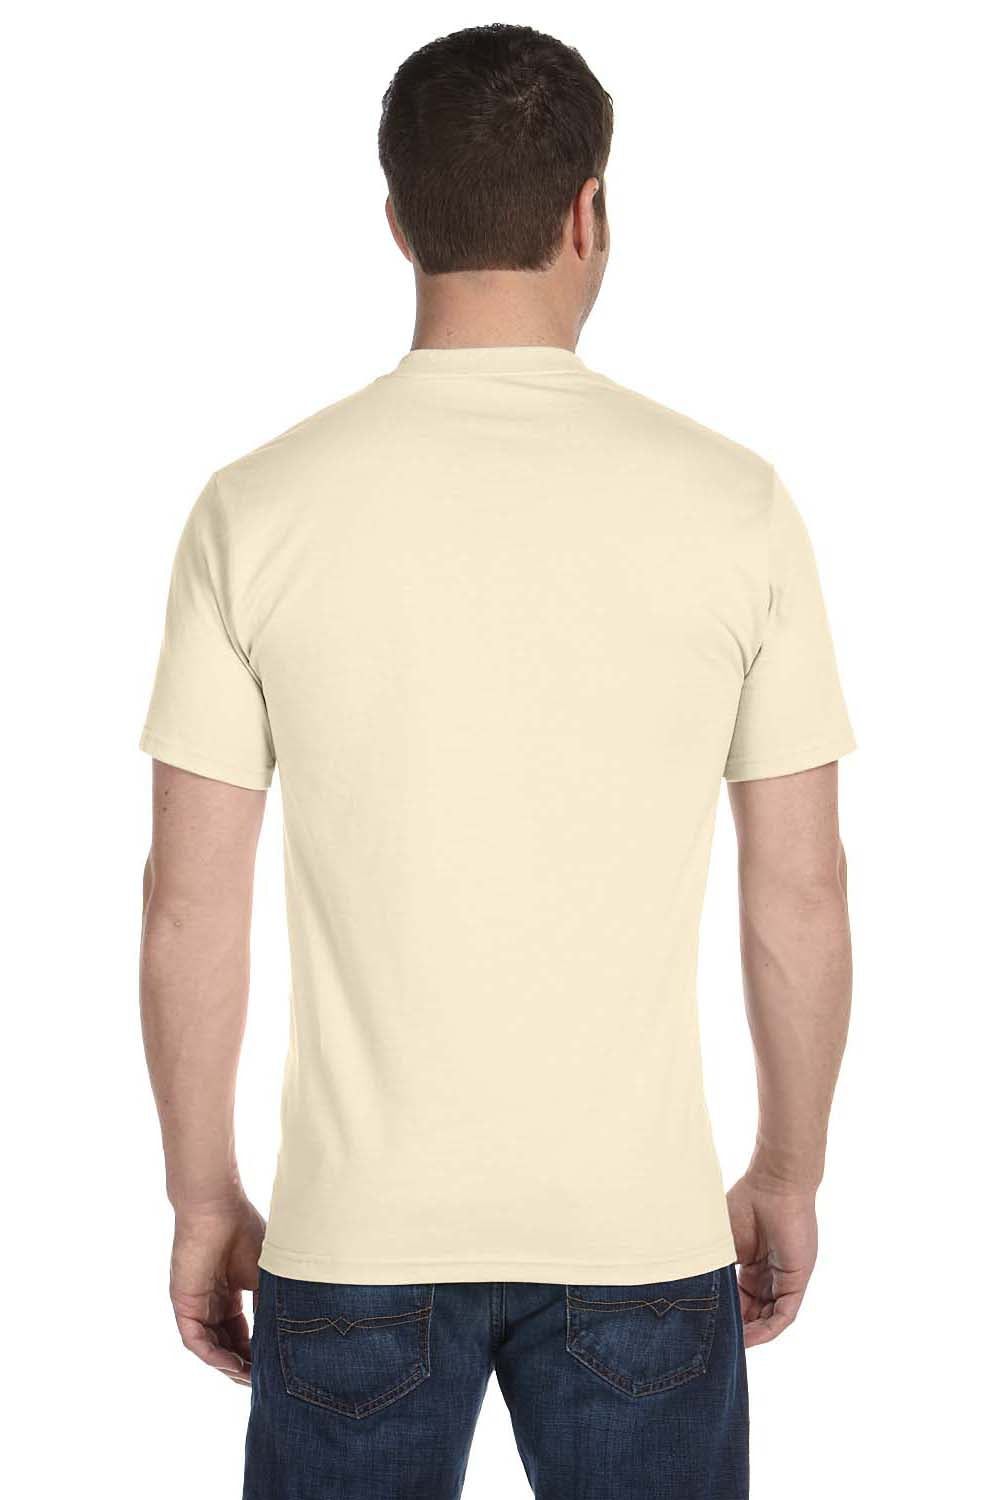 Hanes 5180 Mens Beefy-T Short Sleeve Crewneck T-Shirt Natural Back